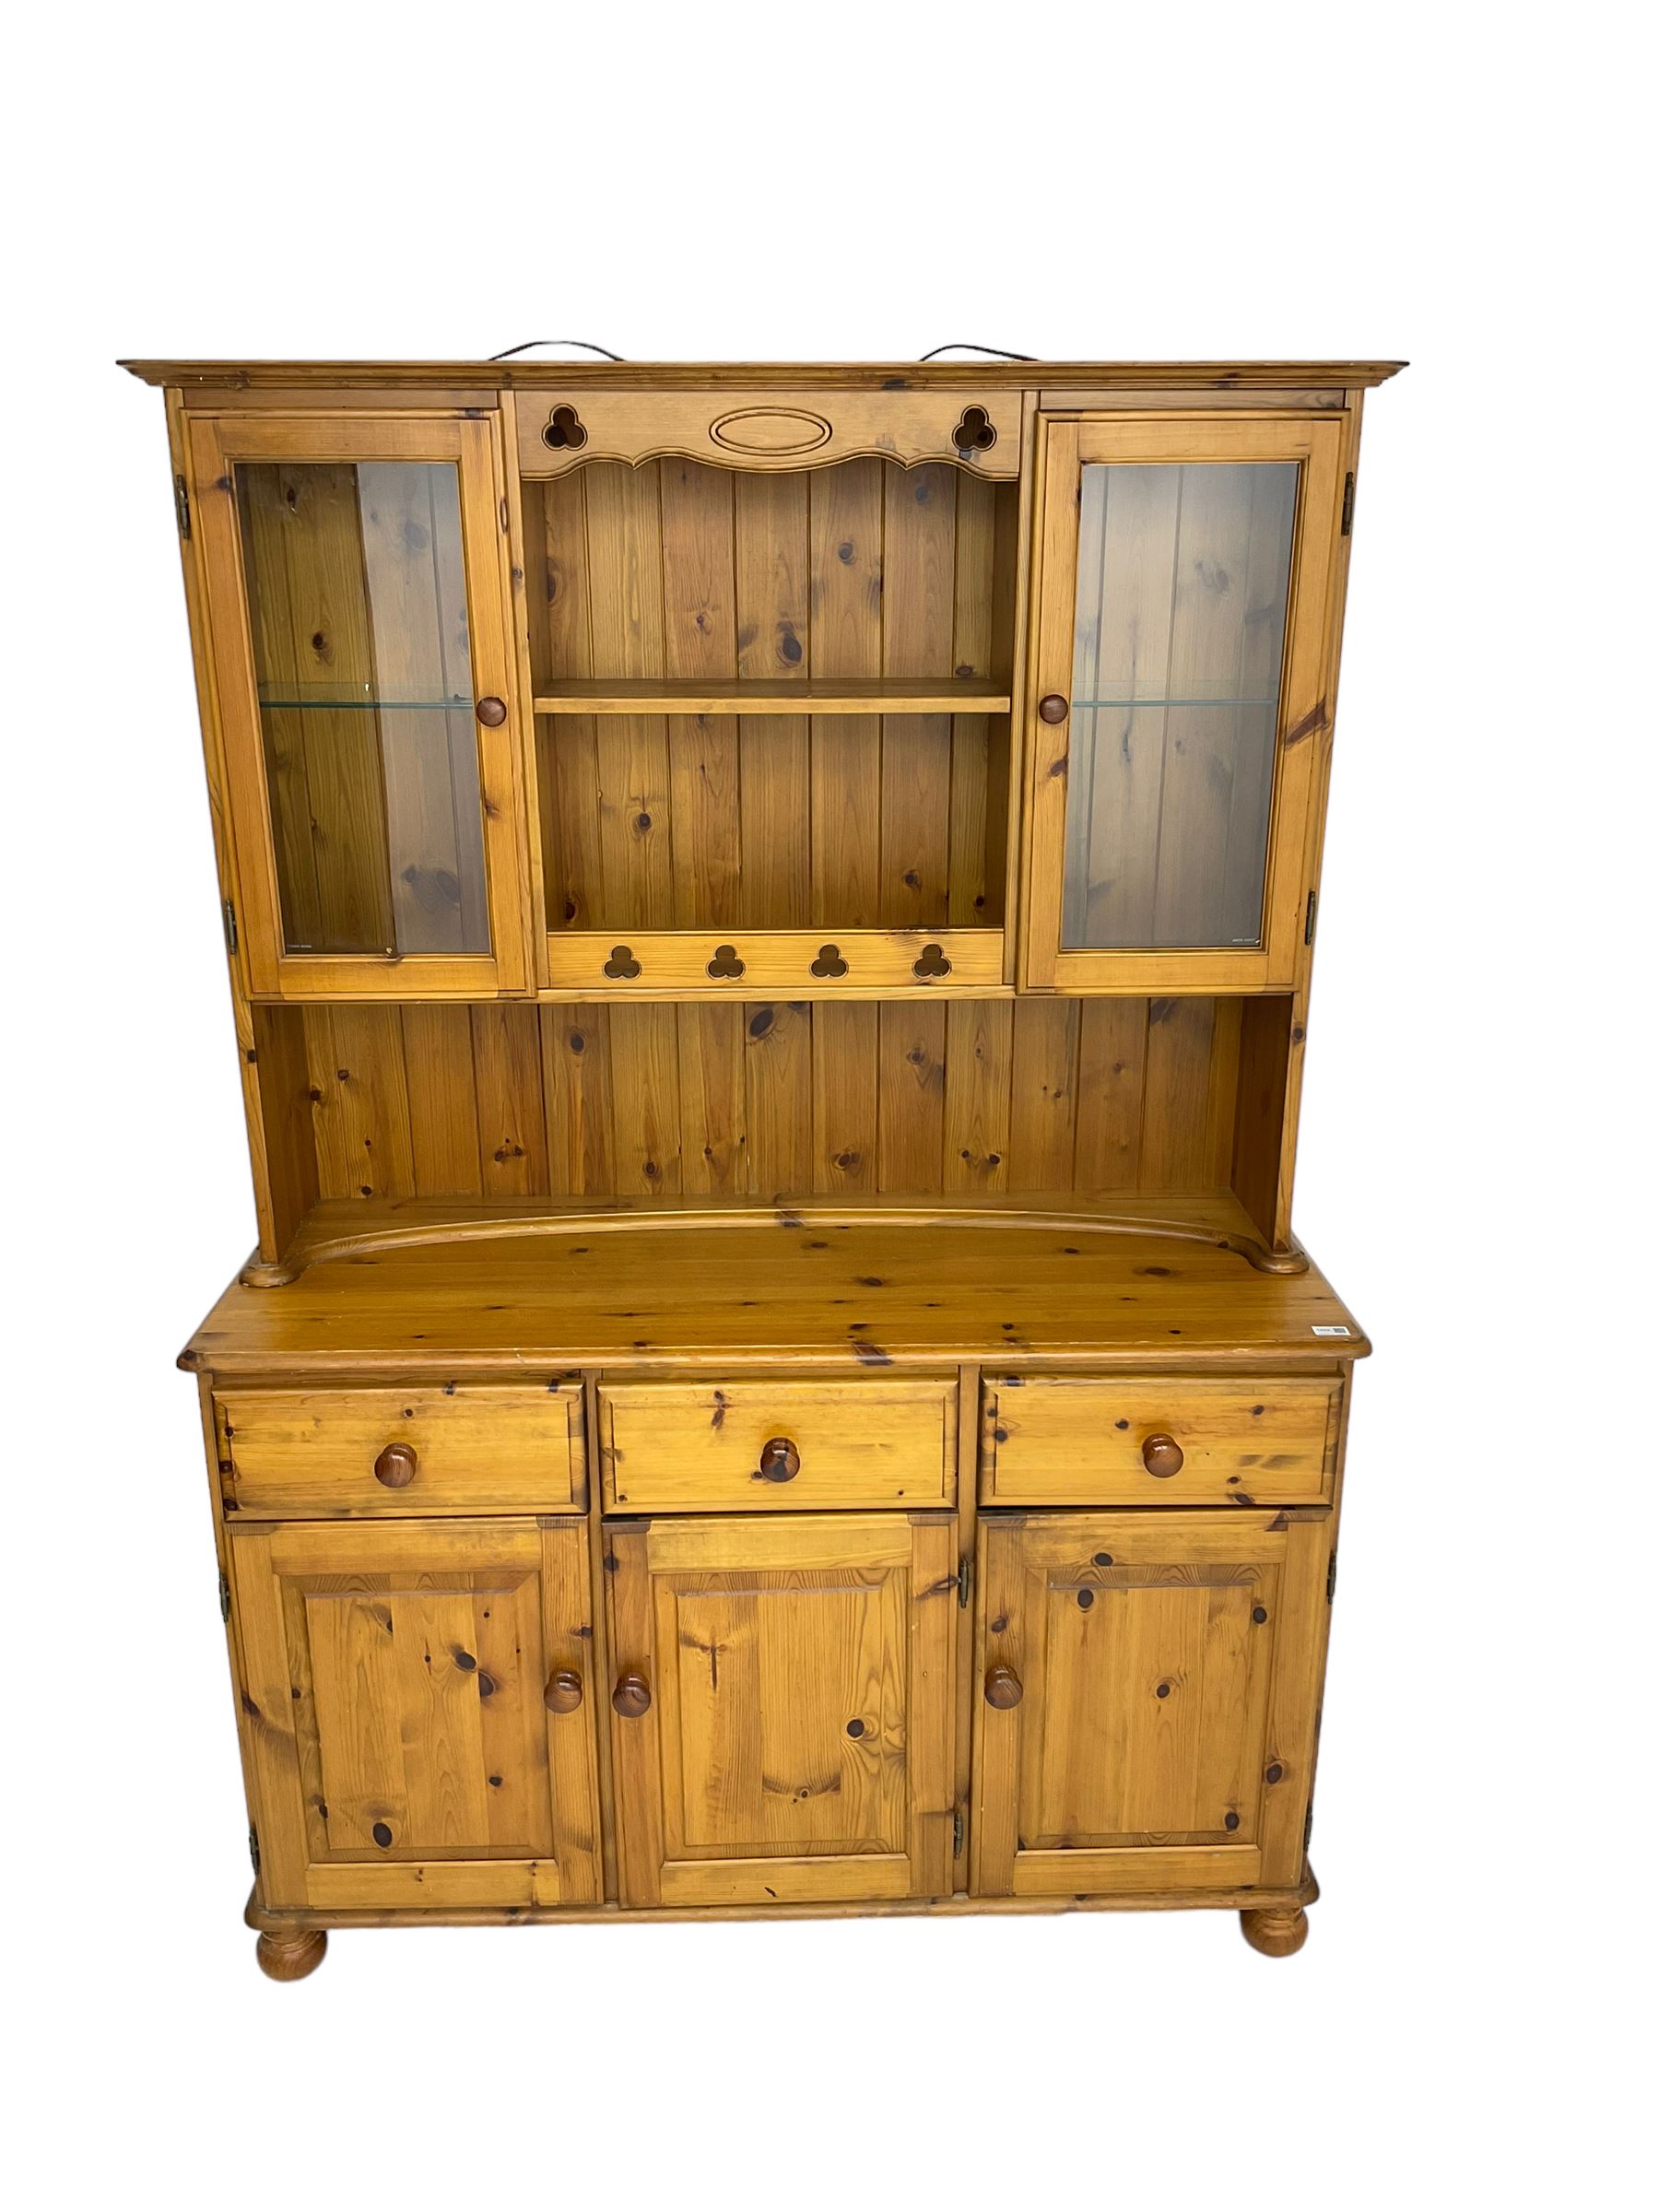 Traditional pine kitchen dresser - Image 2 of 6